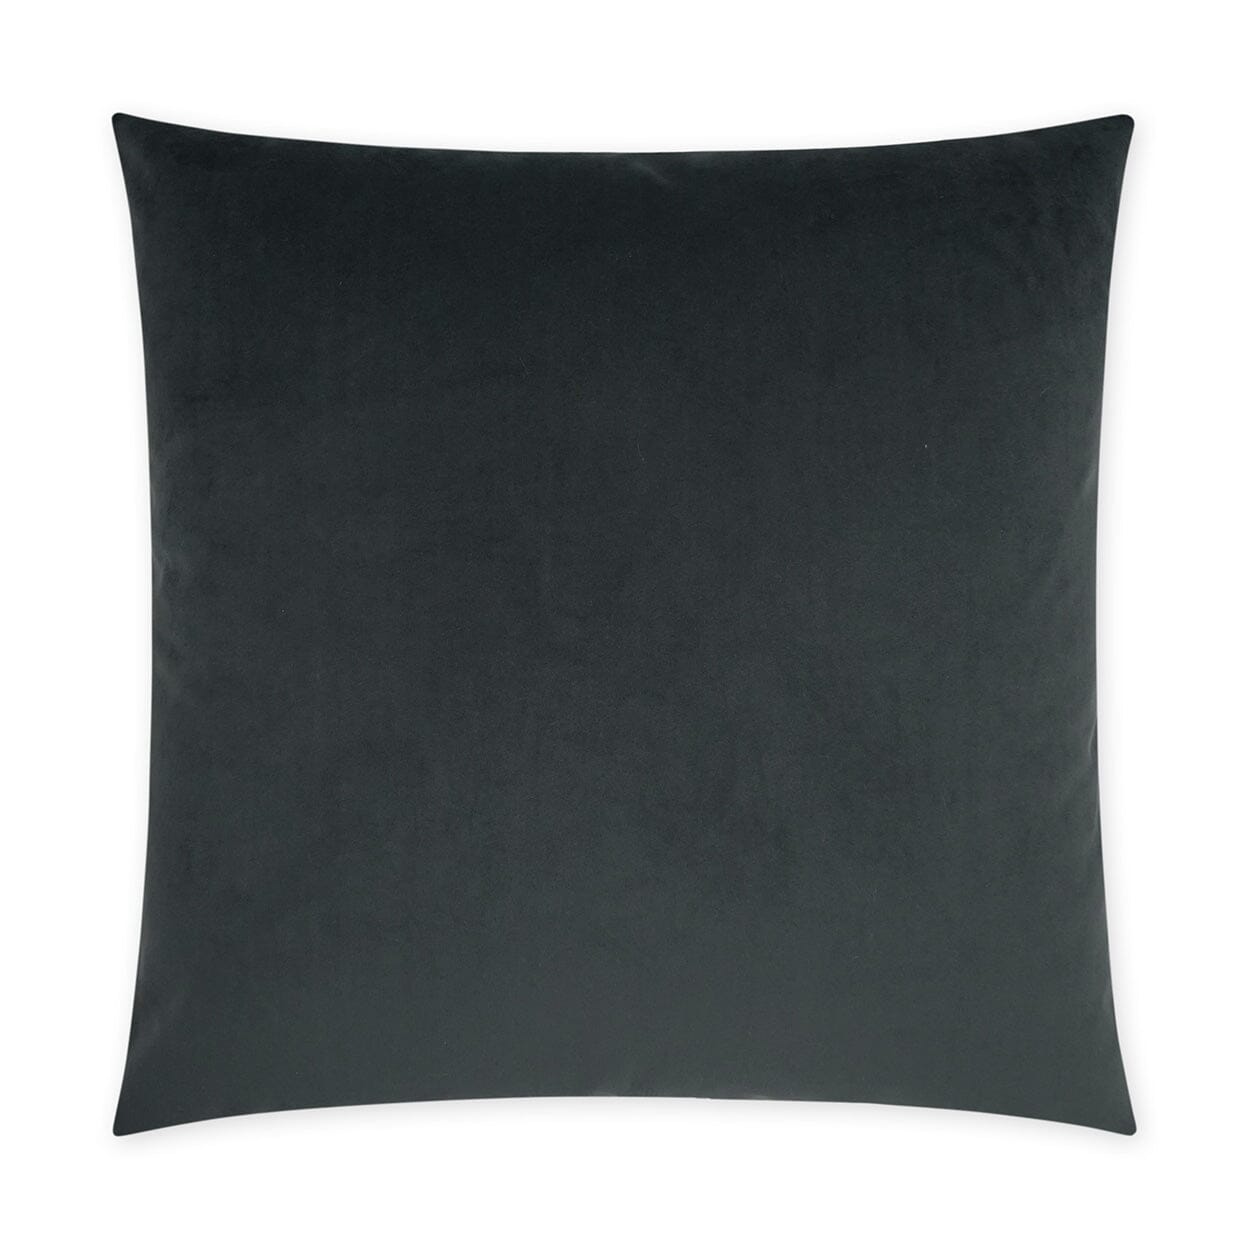 D.V. Kap 24" x 24" Decorative Throw Pillow | Posh Duo Charcoal Pillows D.V Kap Home